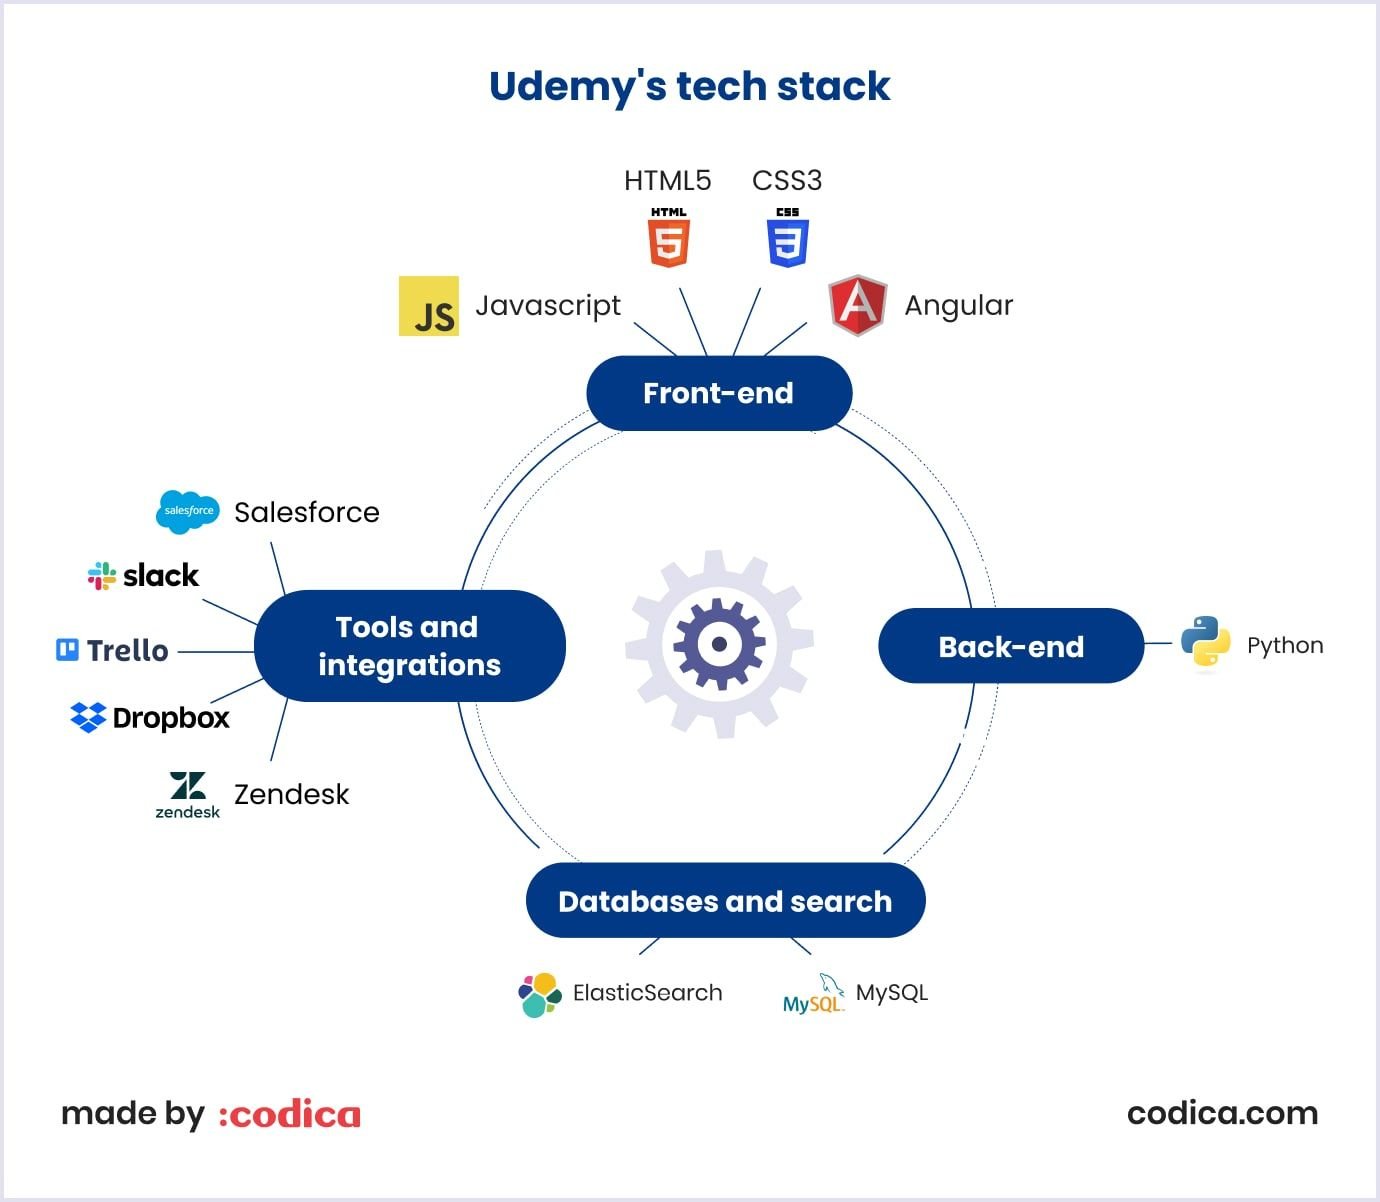 Udemy's tech stack